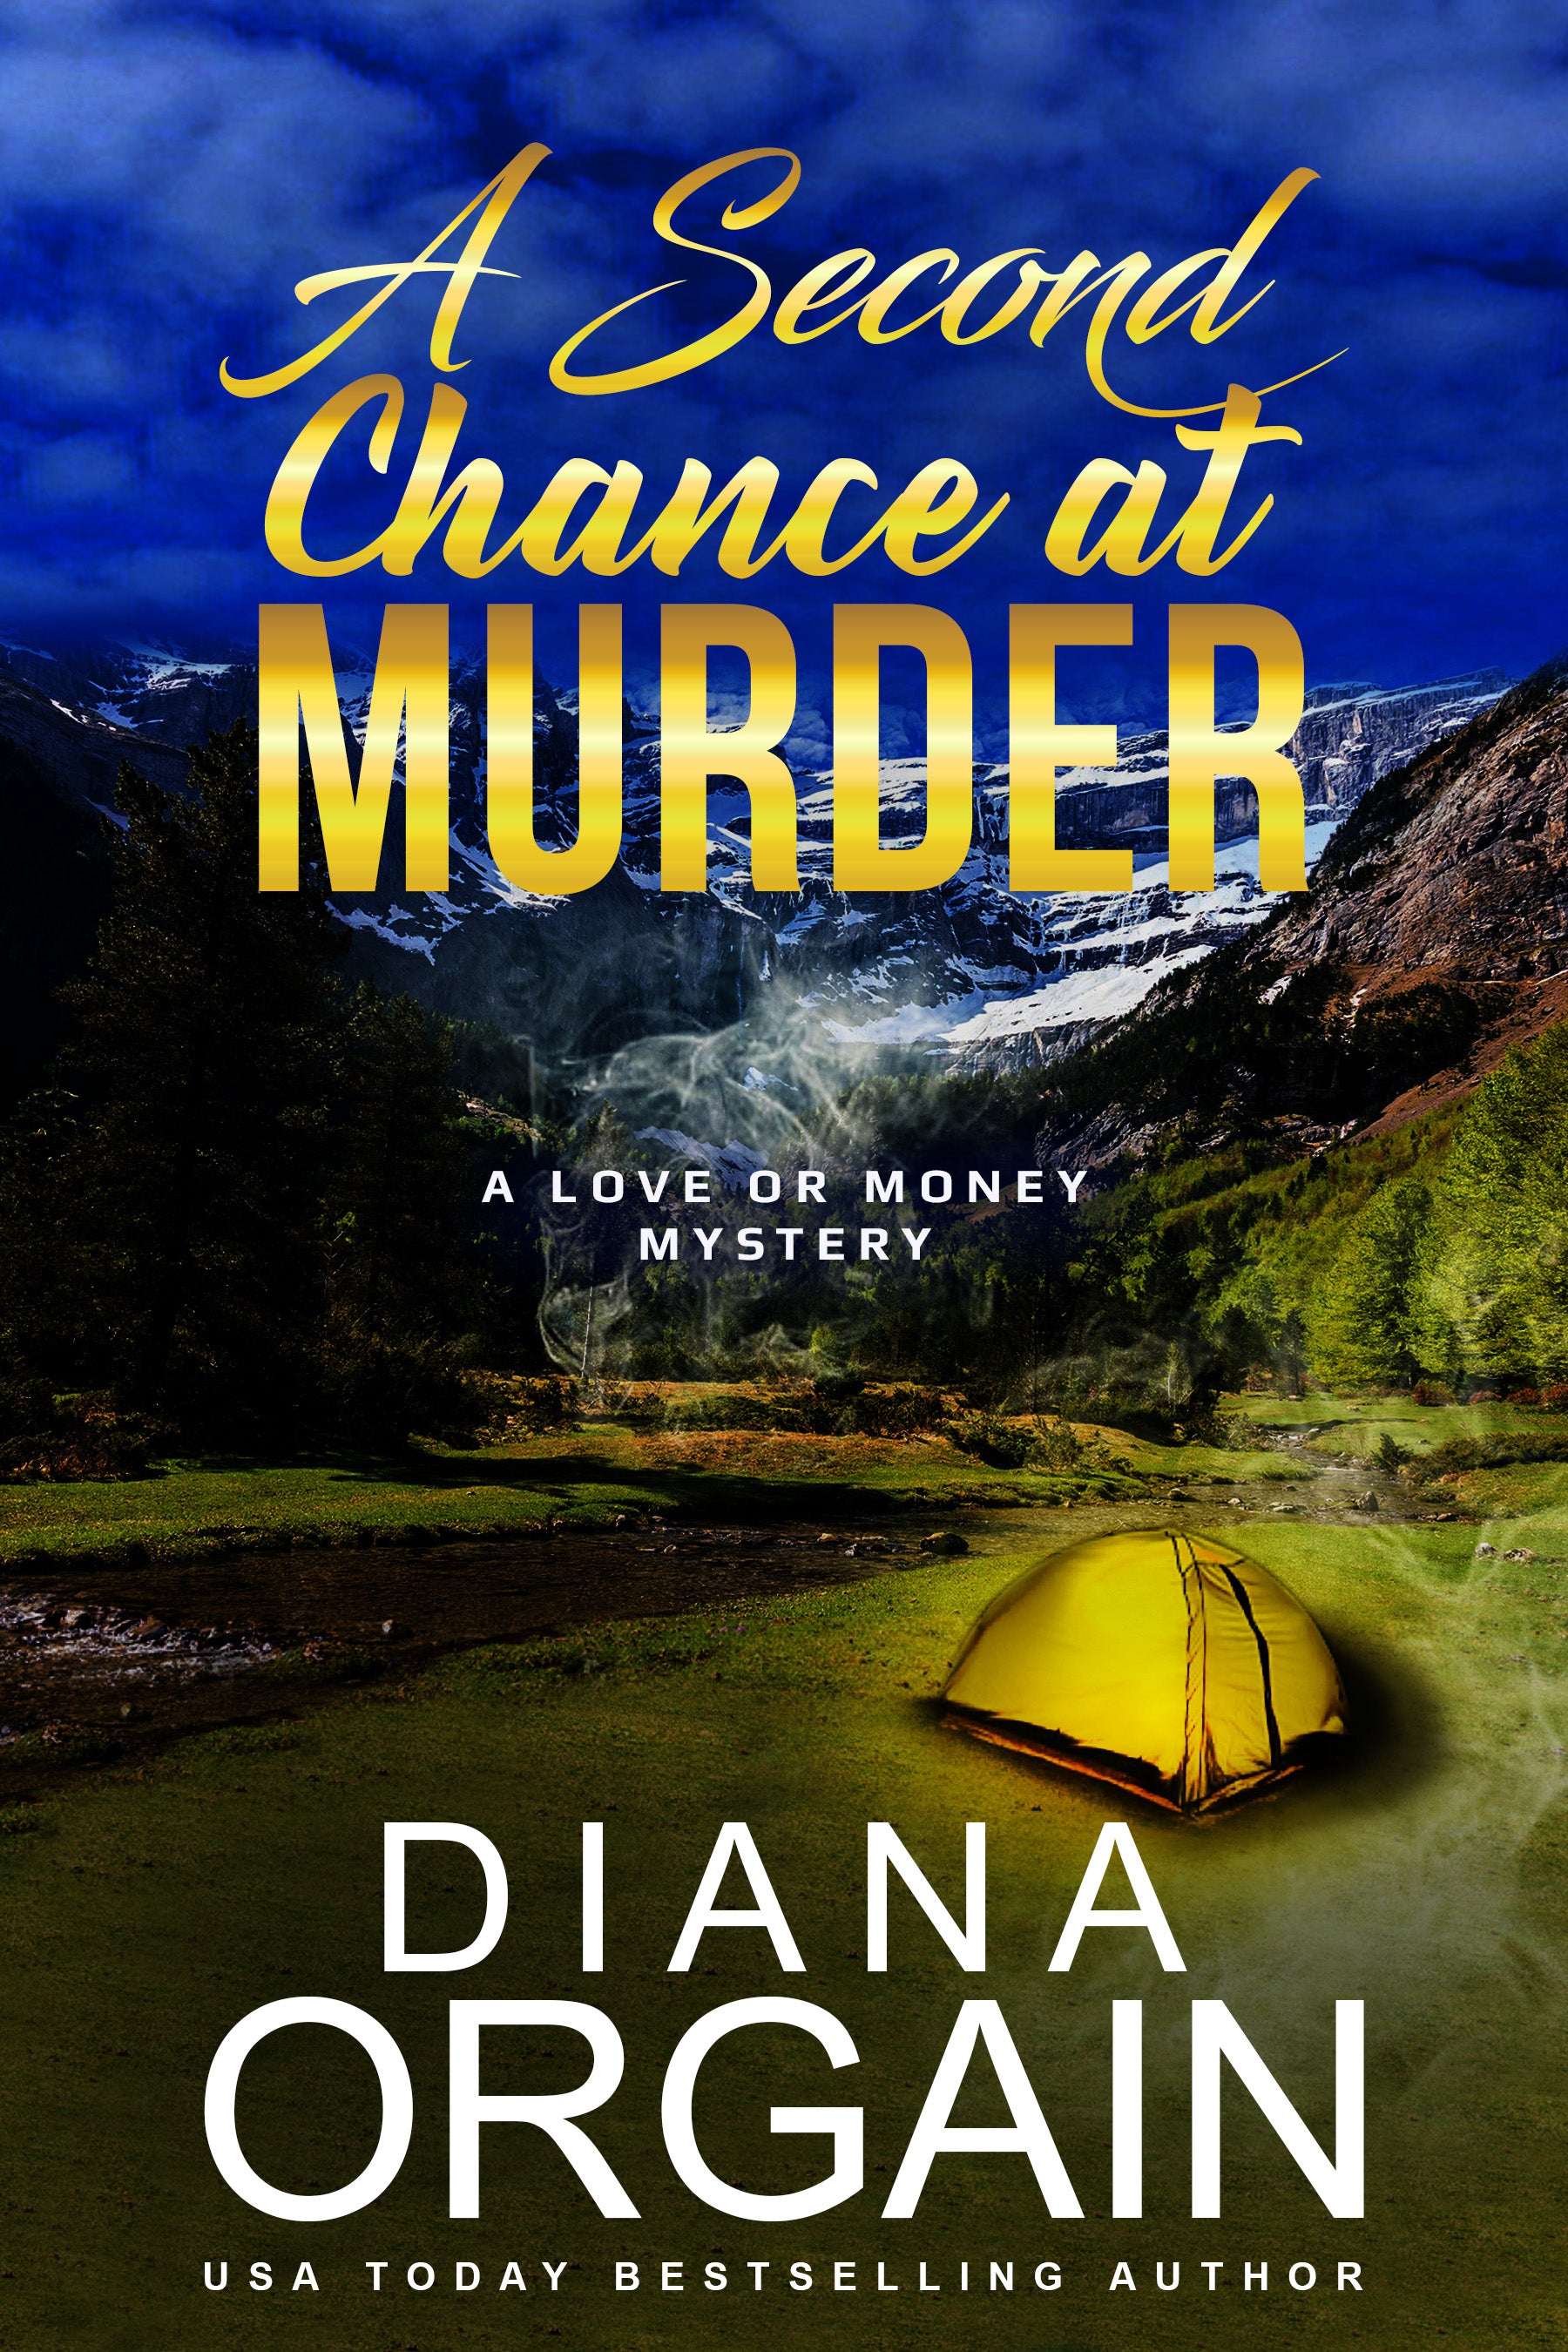 Gold Standard Murder E-BOOK (Book 2 in the Gold Digger Mystery Series) –  Diana Orgain